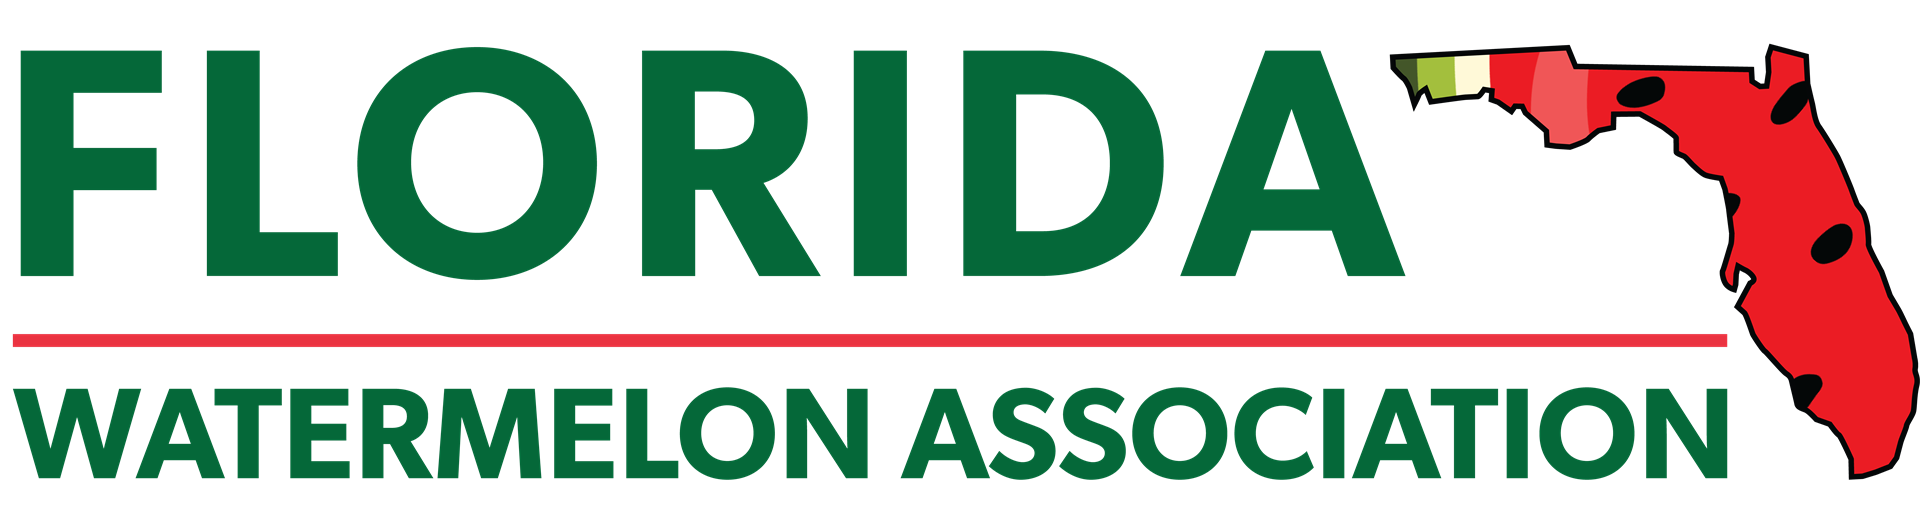 Florida_watermelon_association